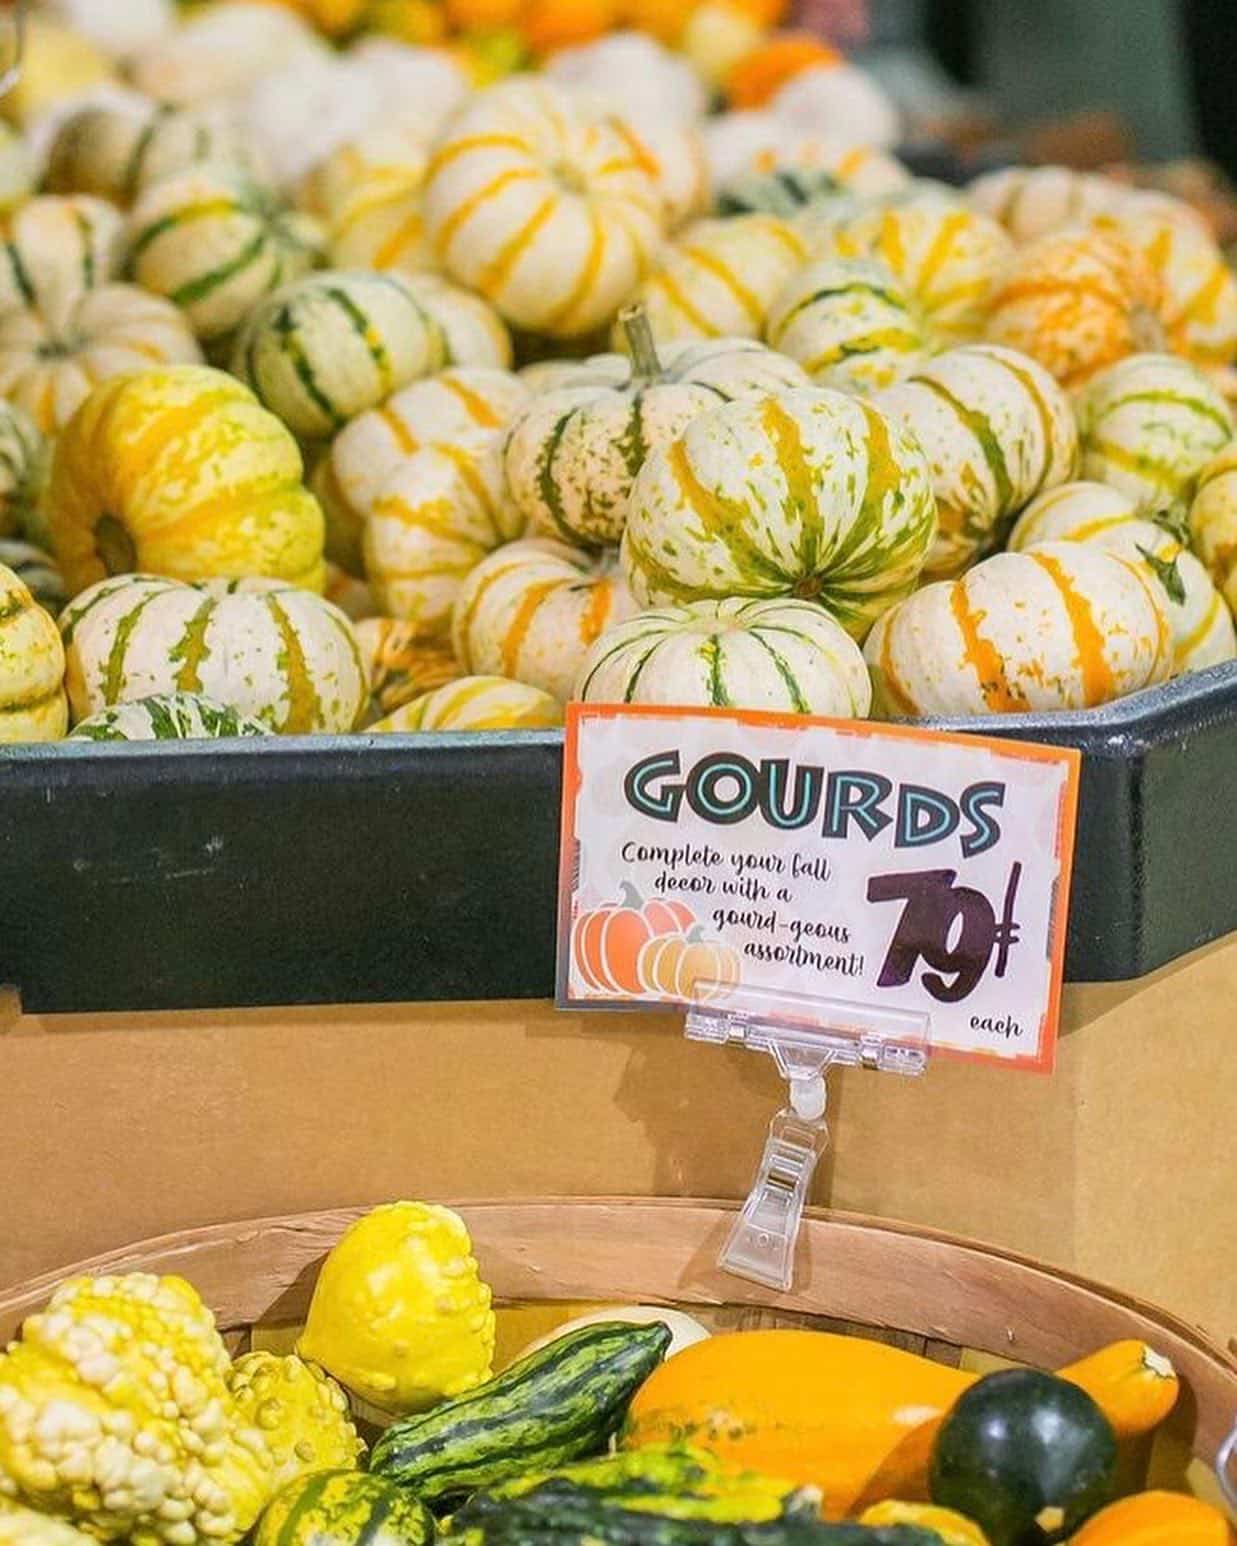 Oh my gourd, it’s pumpkin season!

Swipe to see some of our seasonal favorites from Trader Joe’s!